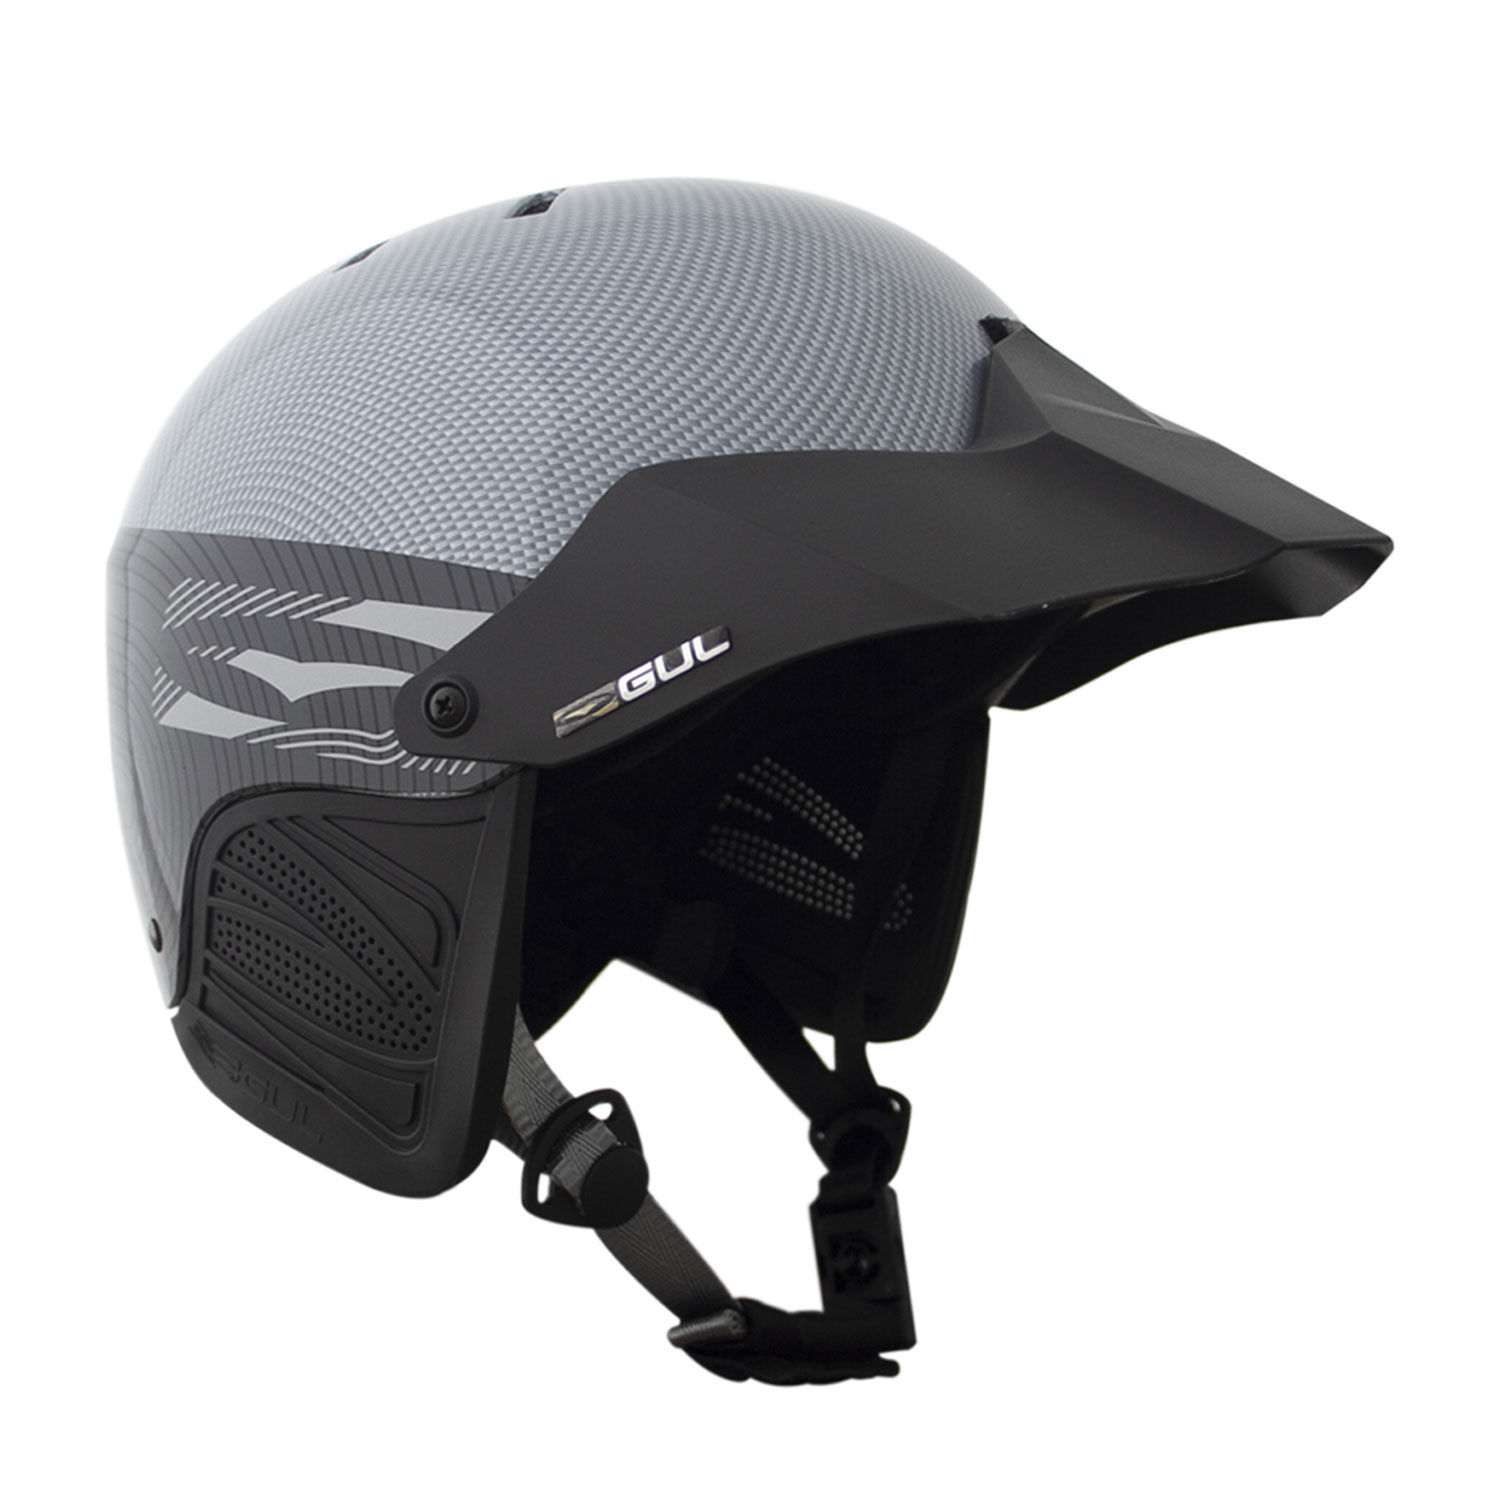 Gul Elite Watersports Helmet 2019 - Silver/Carbon | Coast Water Sports